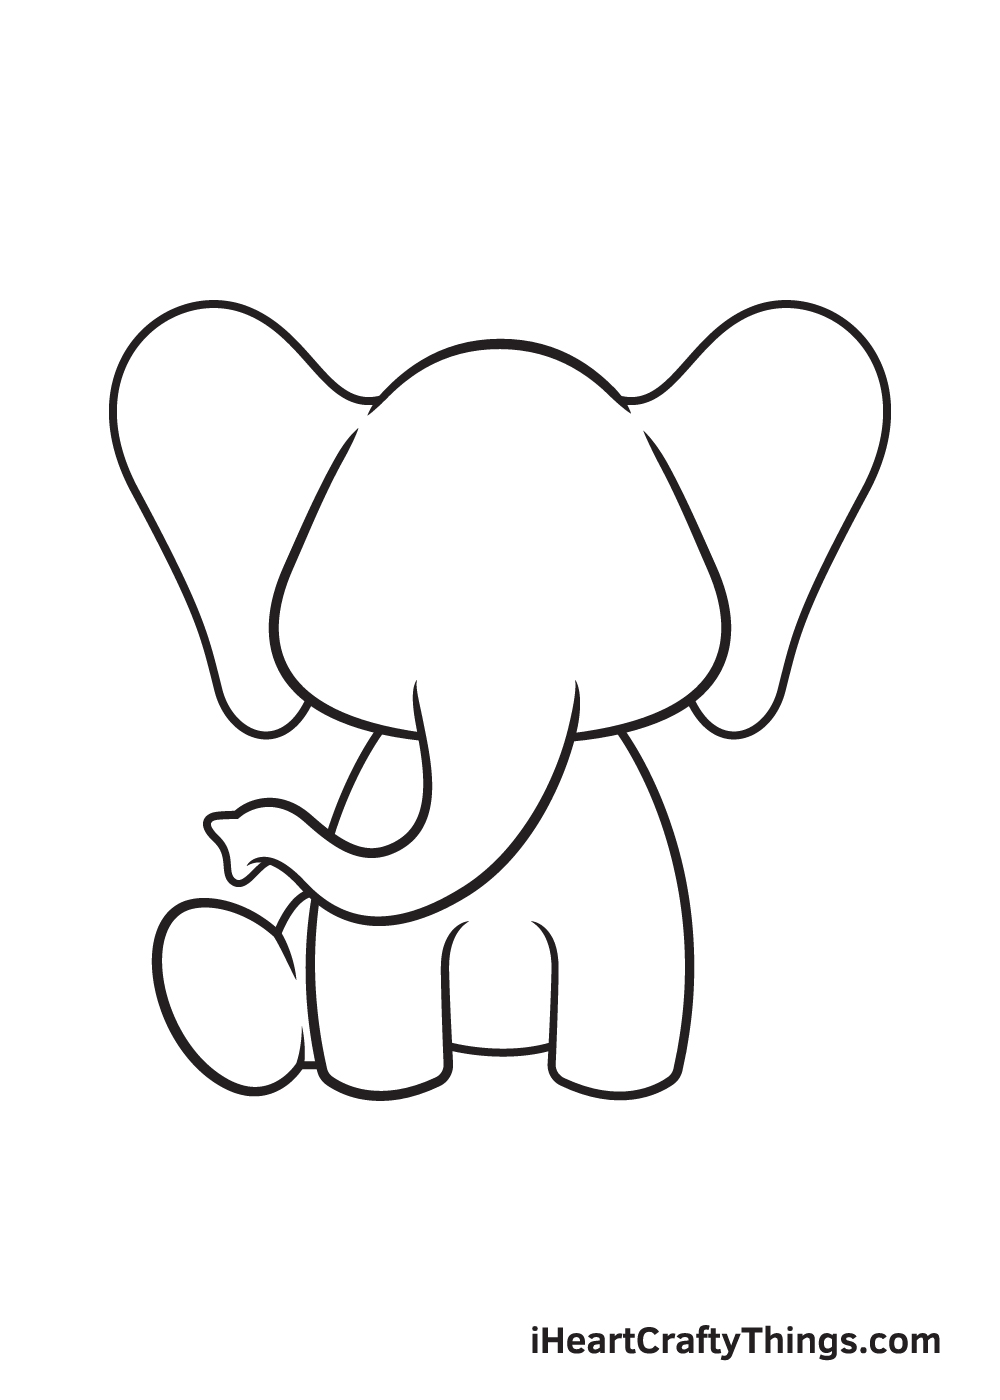 Elephant Drawing – Step 6